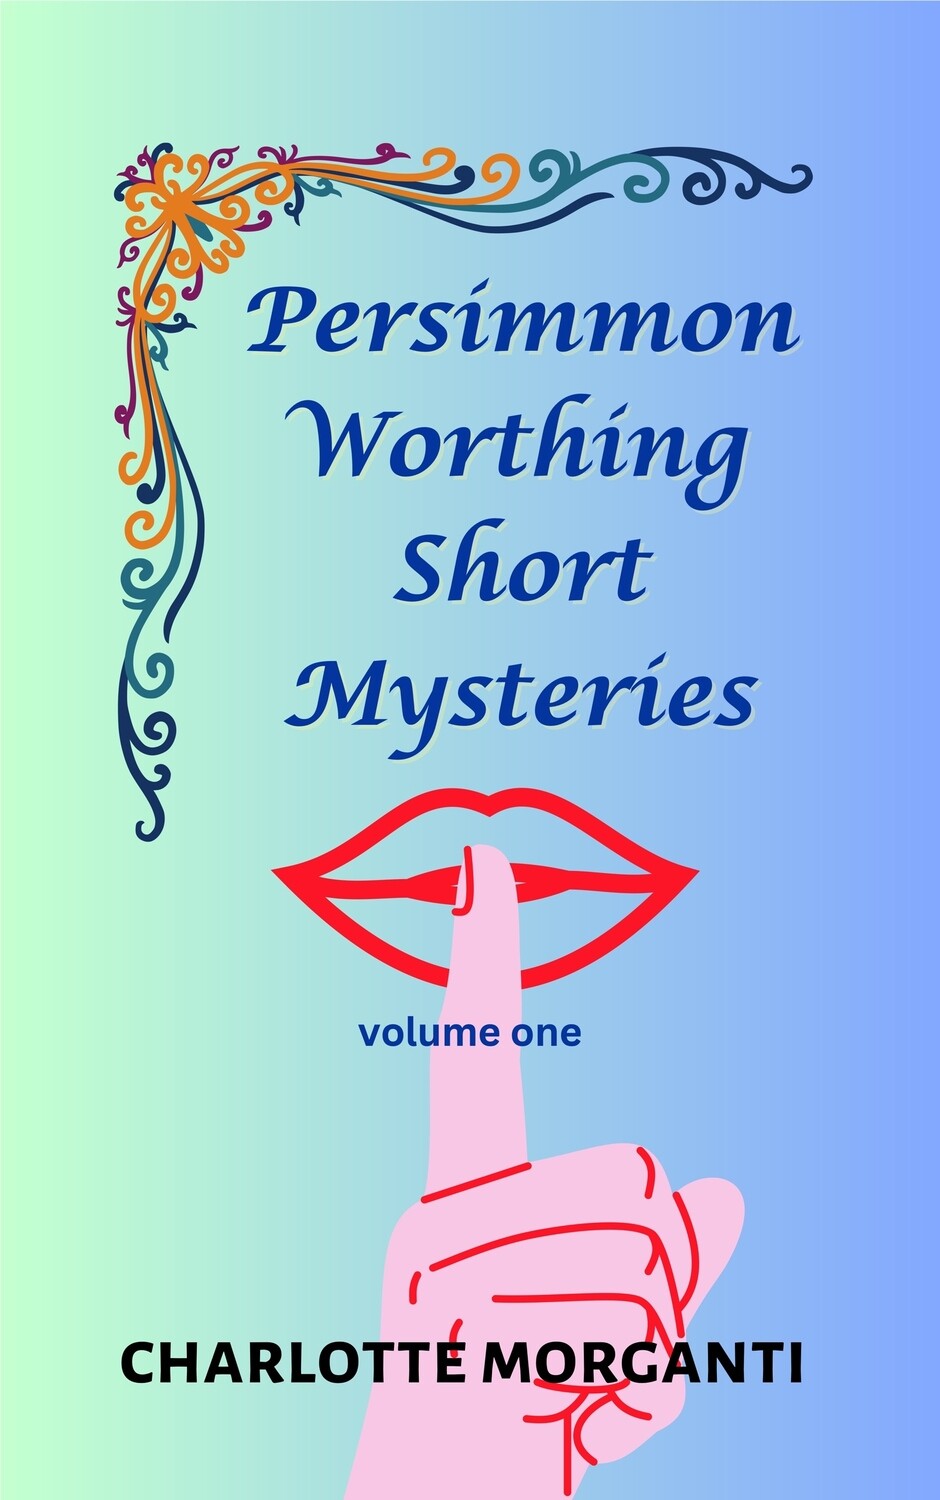 Persimmon Worthing Short Mysteries, Volume One digital version